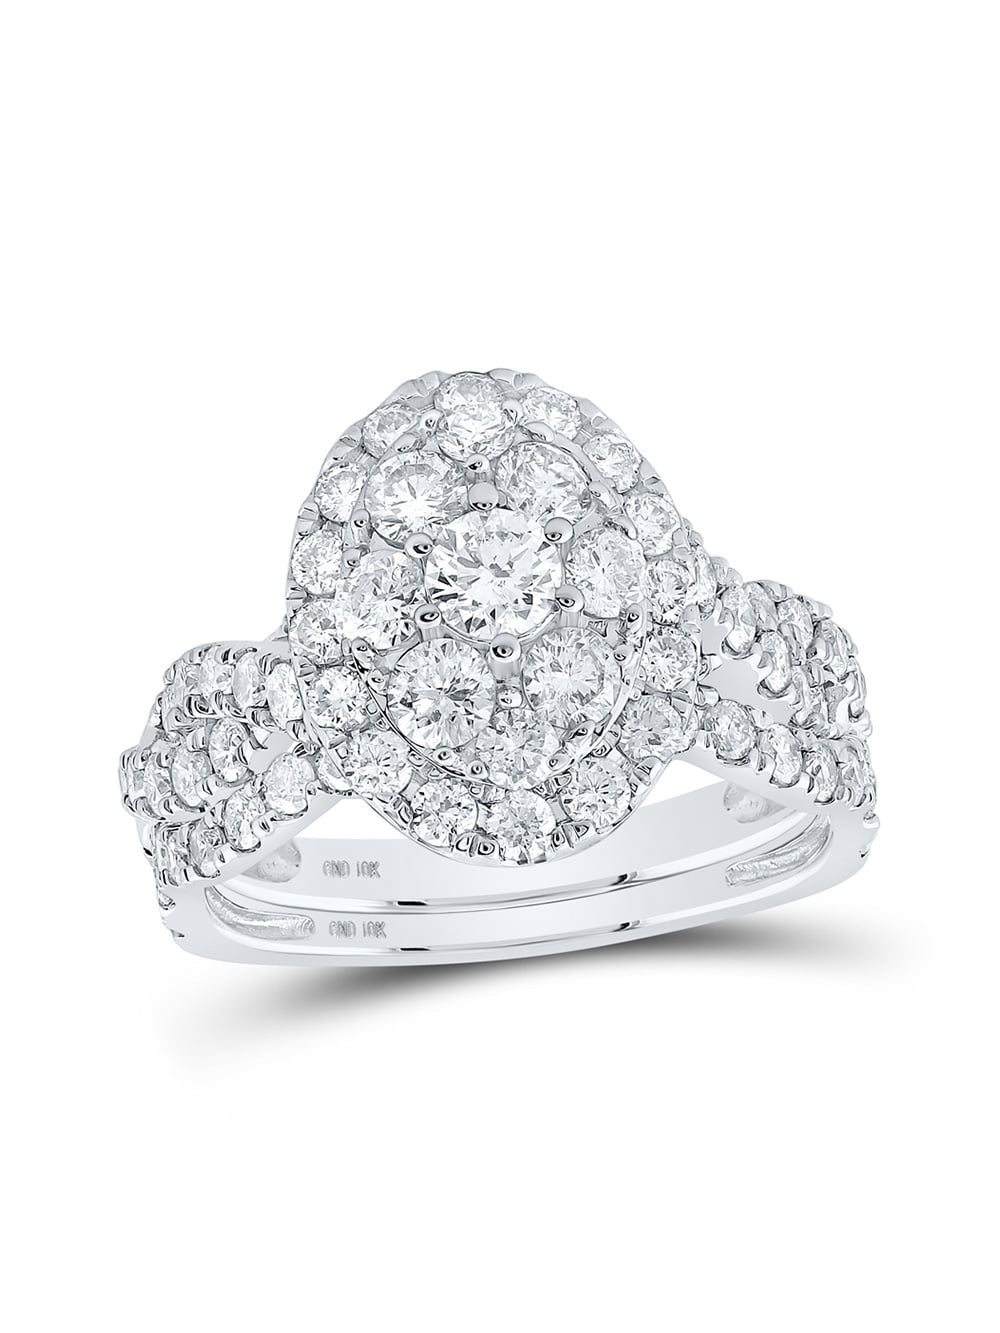 Details about   1 CT Round Diamond Miracle Set Bridal Wedding Bracelet 14k White Gold Finish 